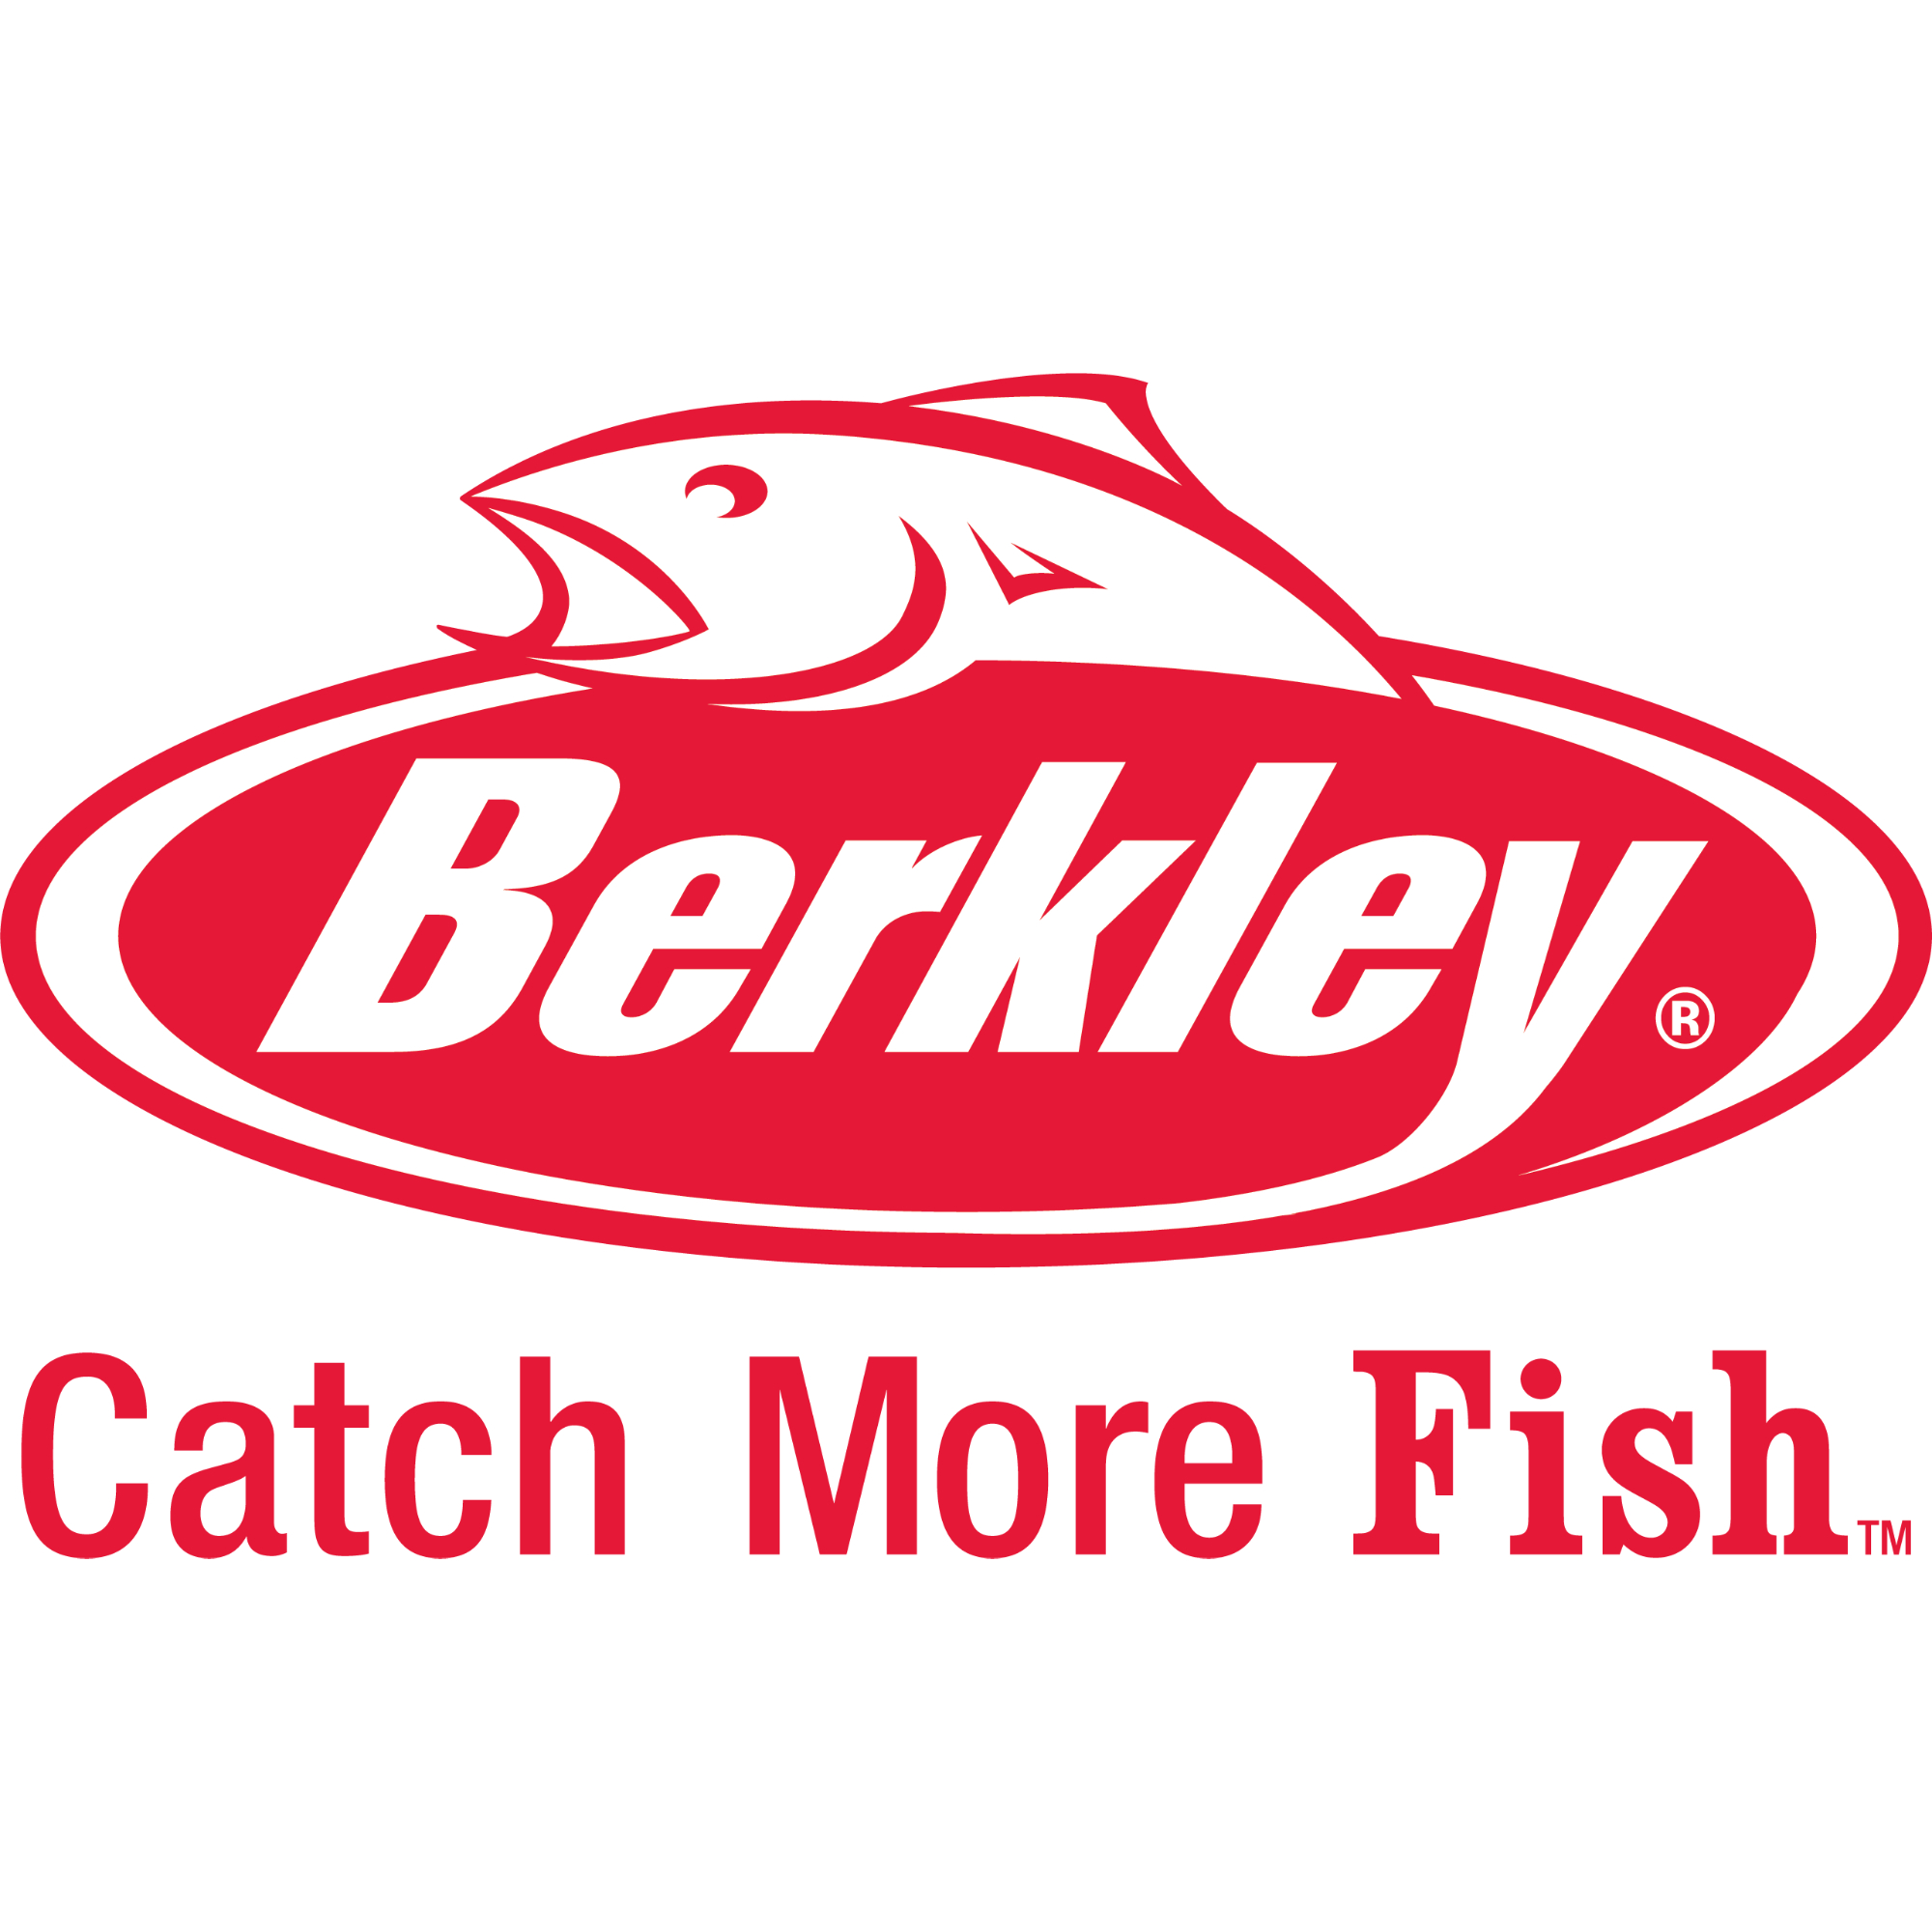 Berkley Trilene Big Game, Green, 8lb 3.6kg Monofilament Fishing Line - image 5 of 7